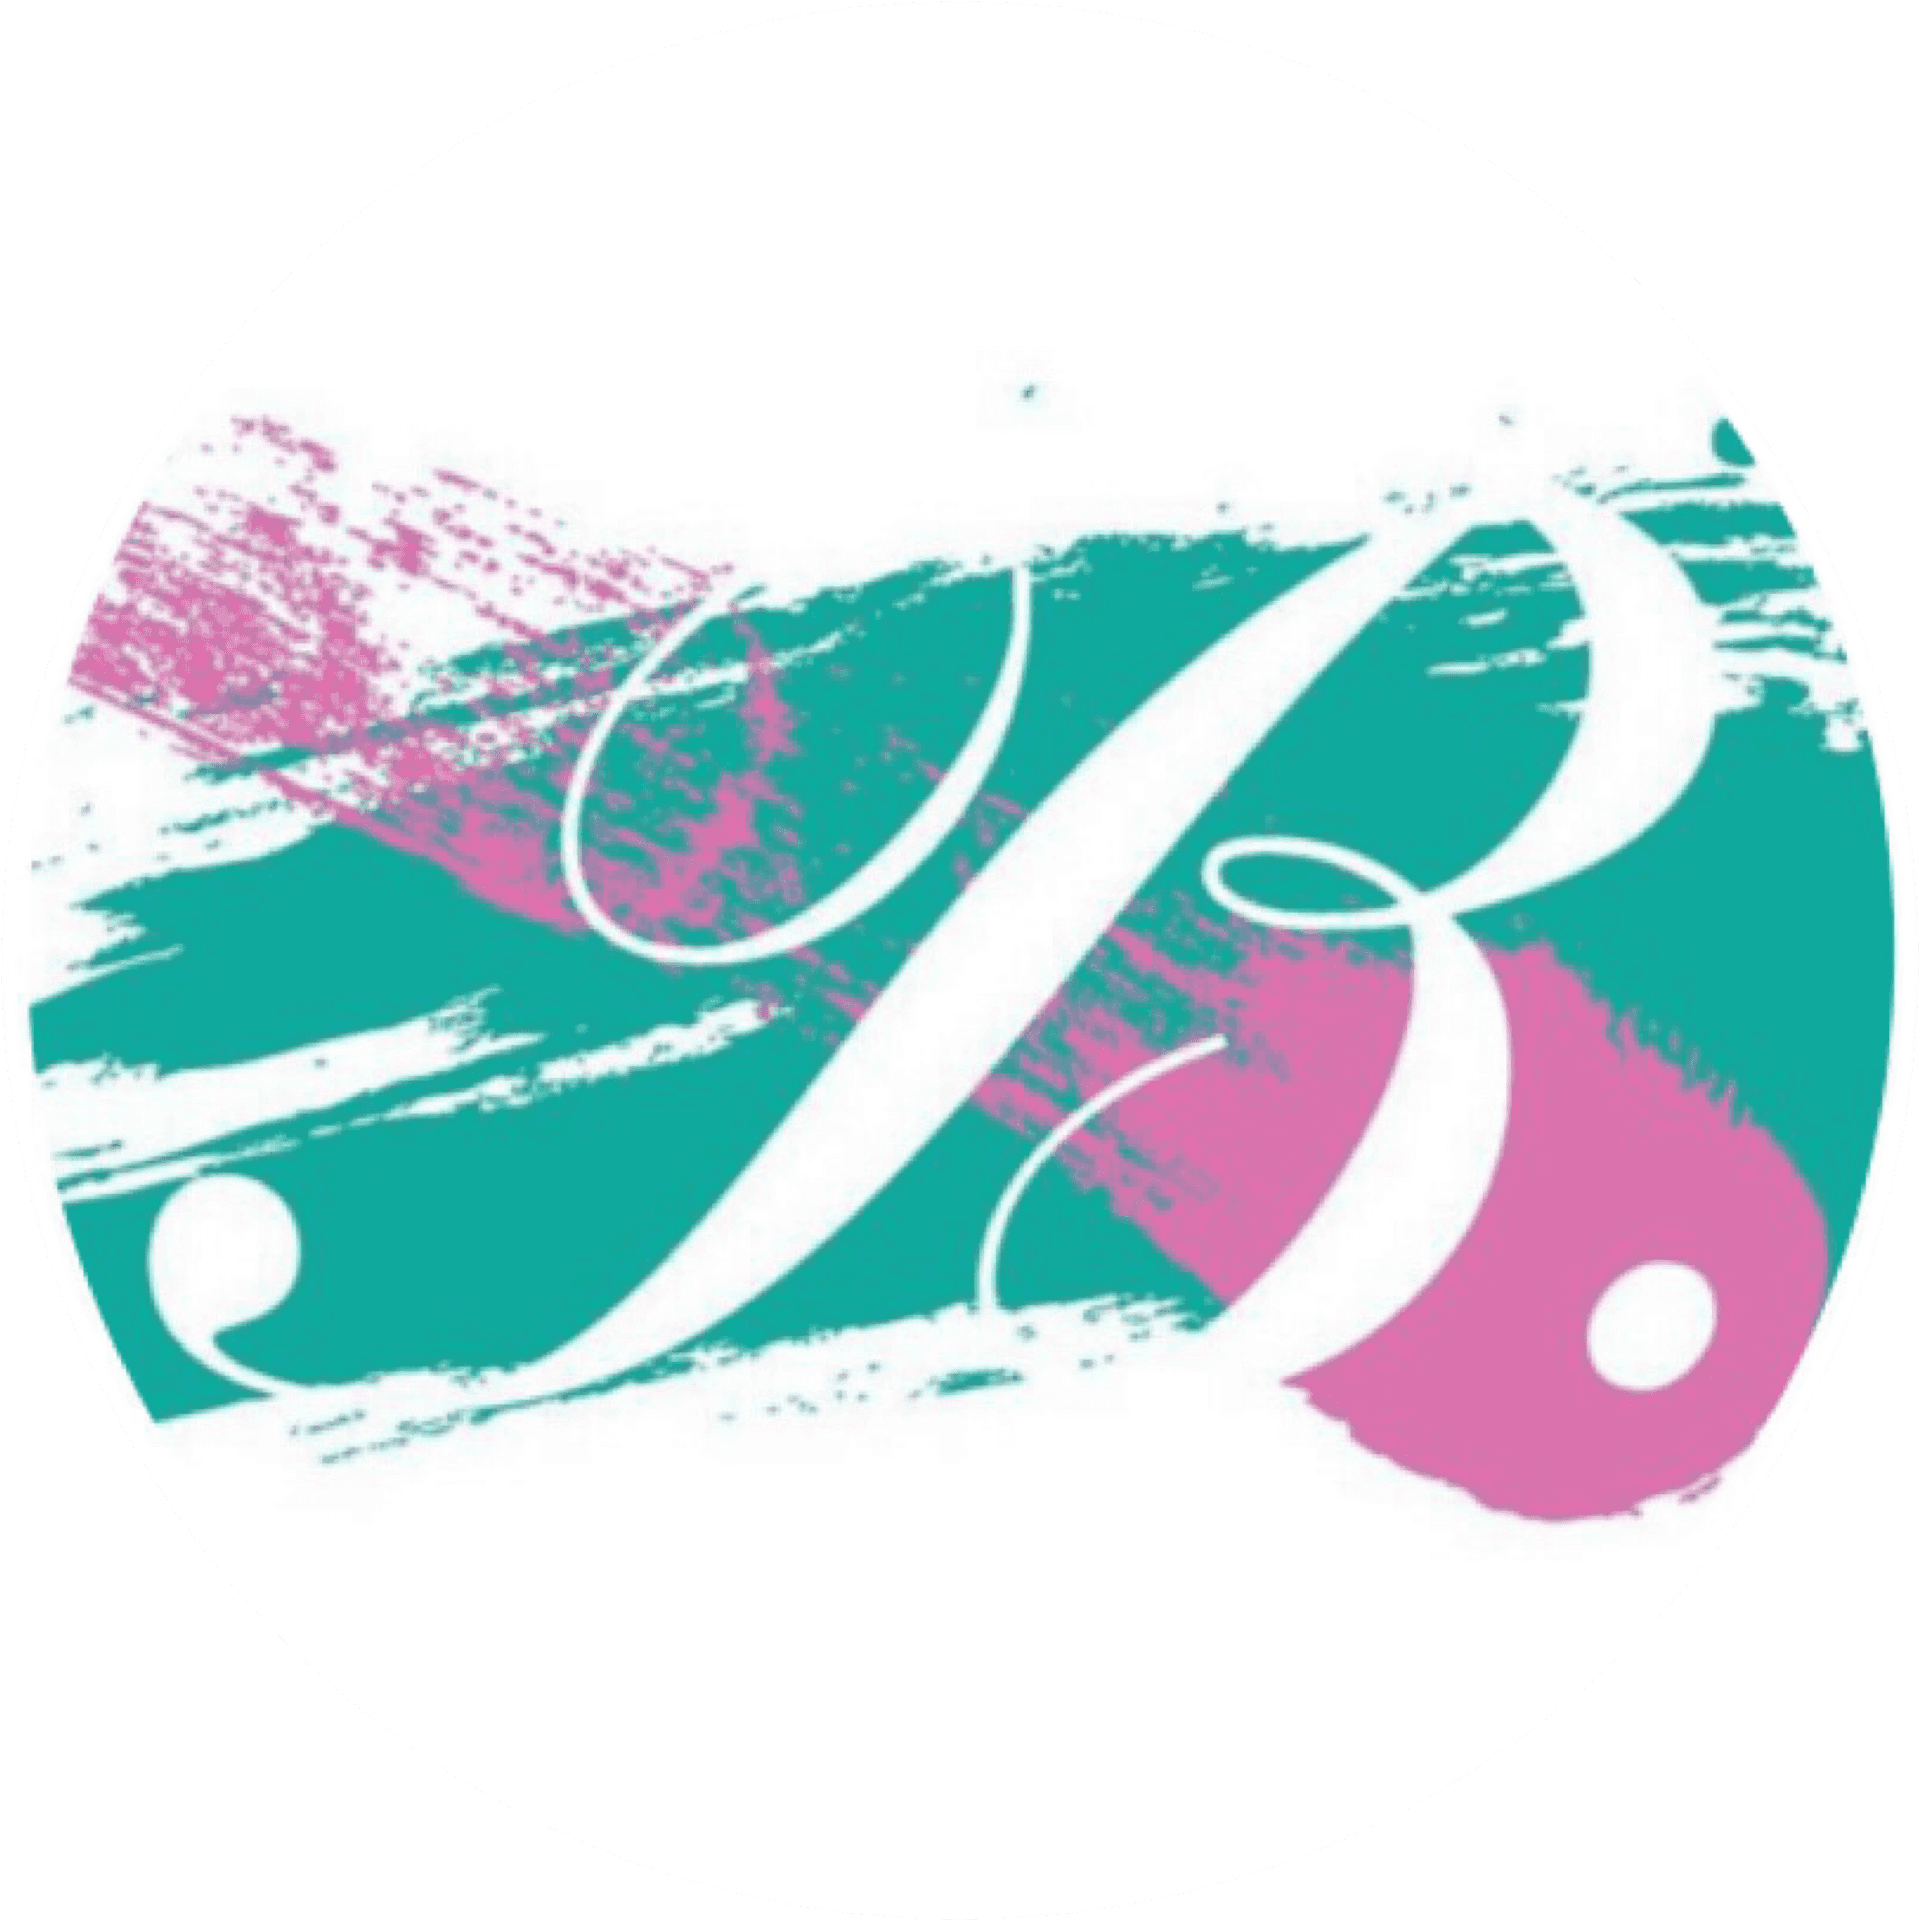 Abstract Aquaand Pink Circle Design PNG